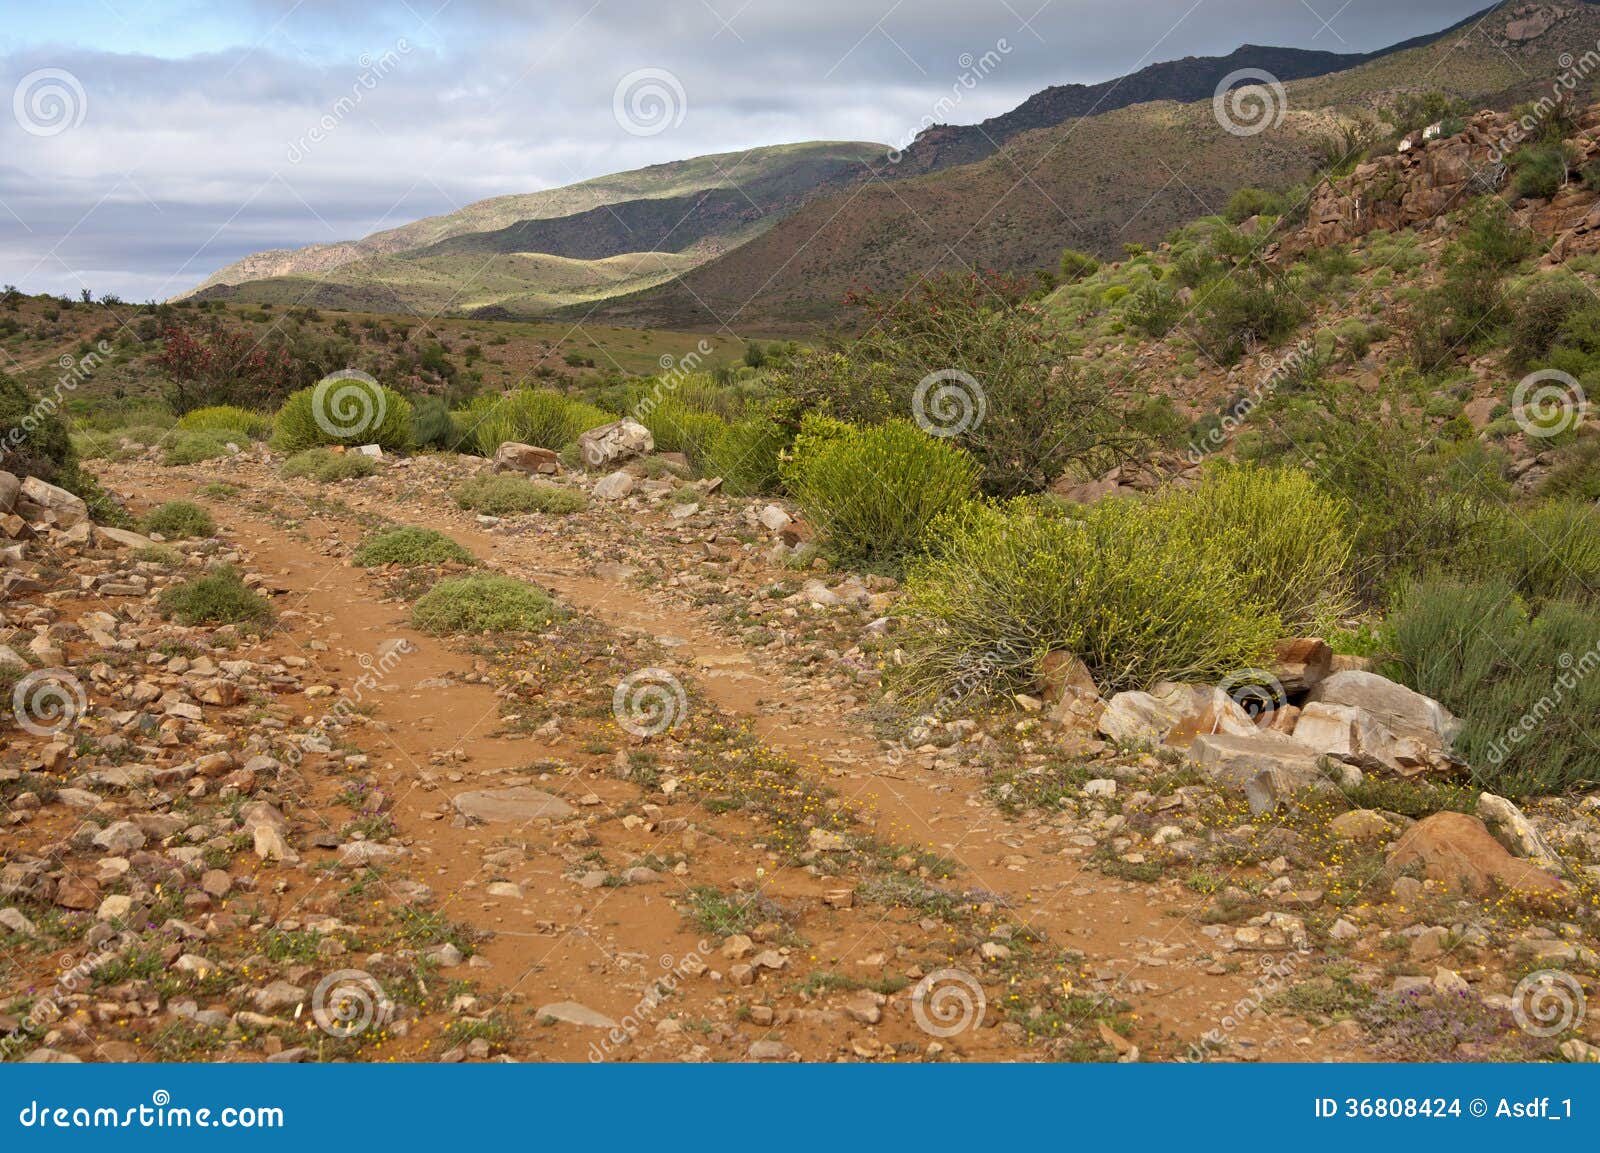 rough road in the nama karoo shrubland